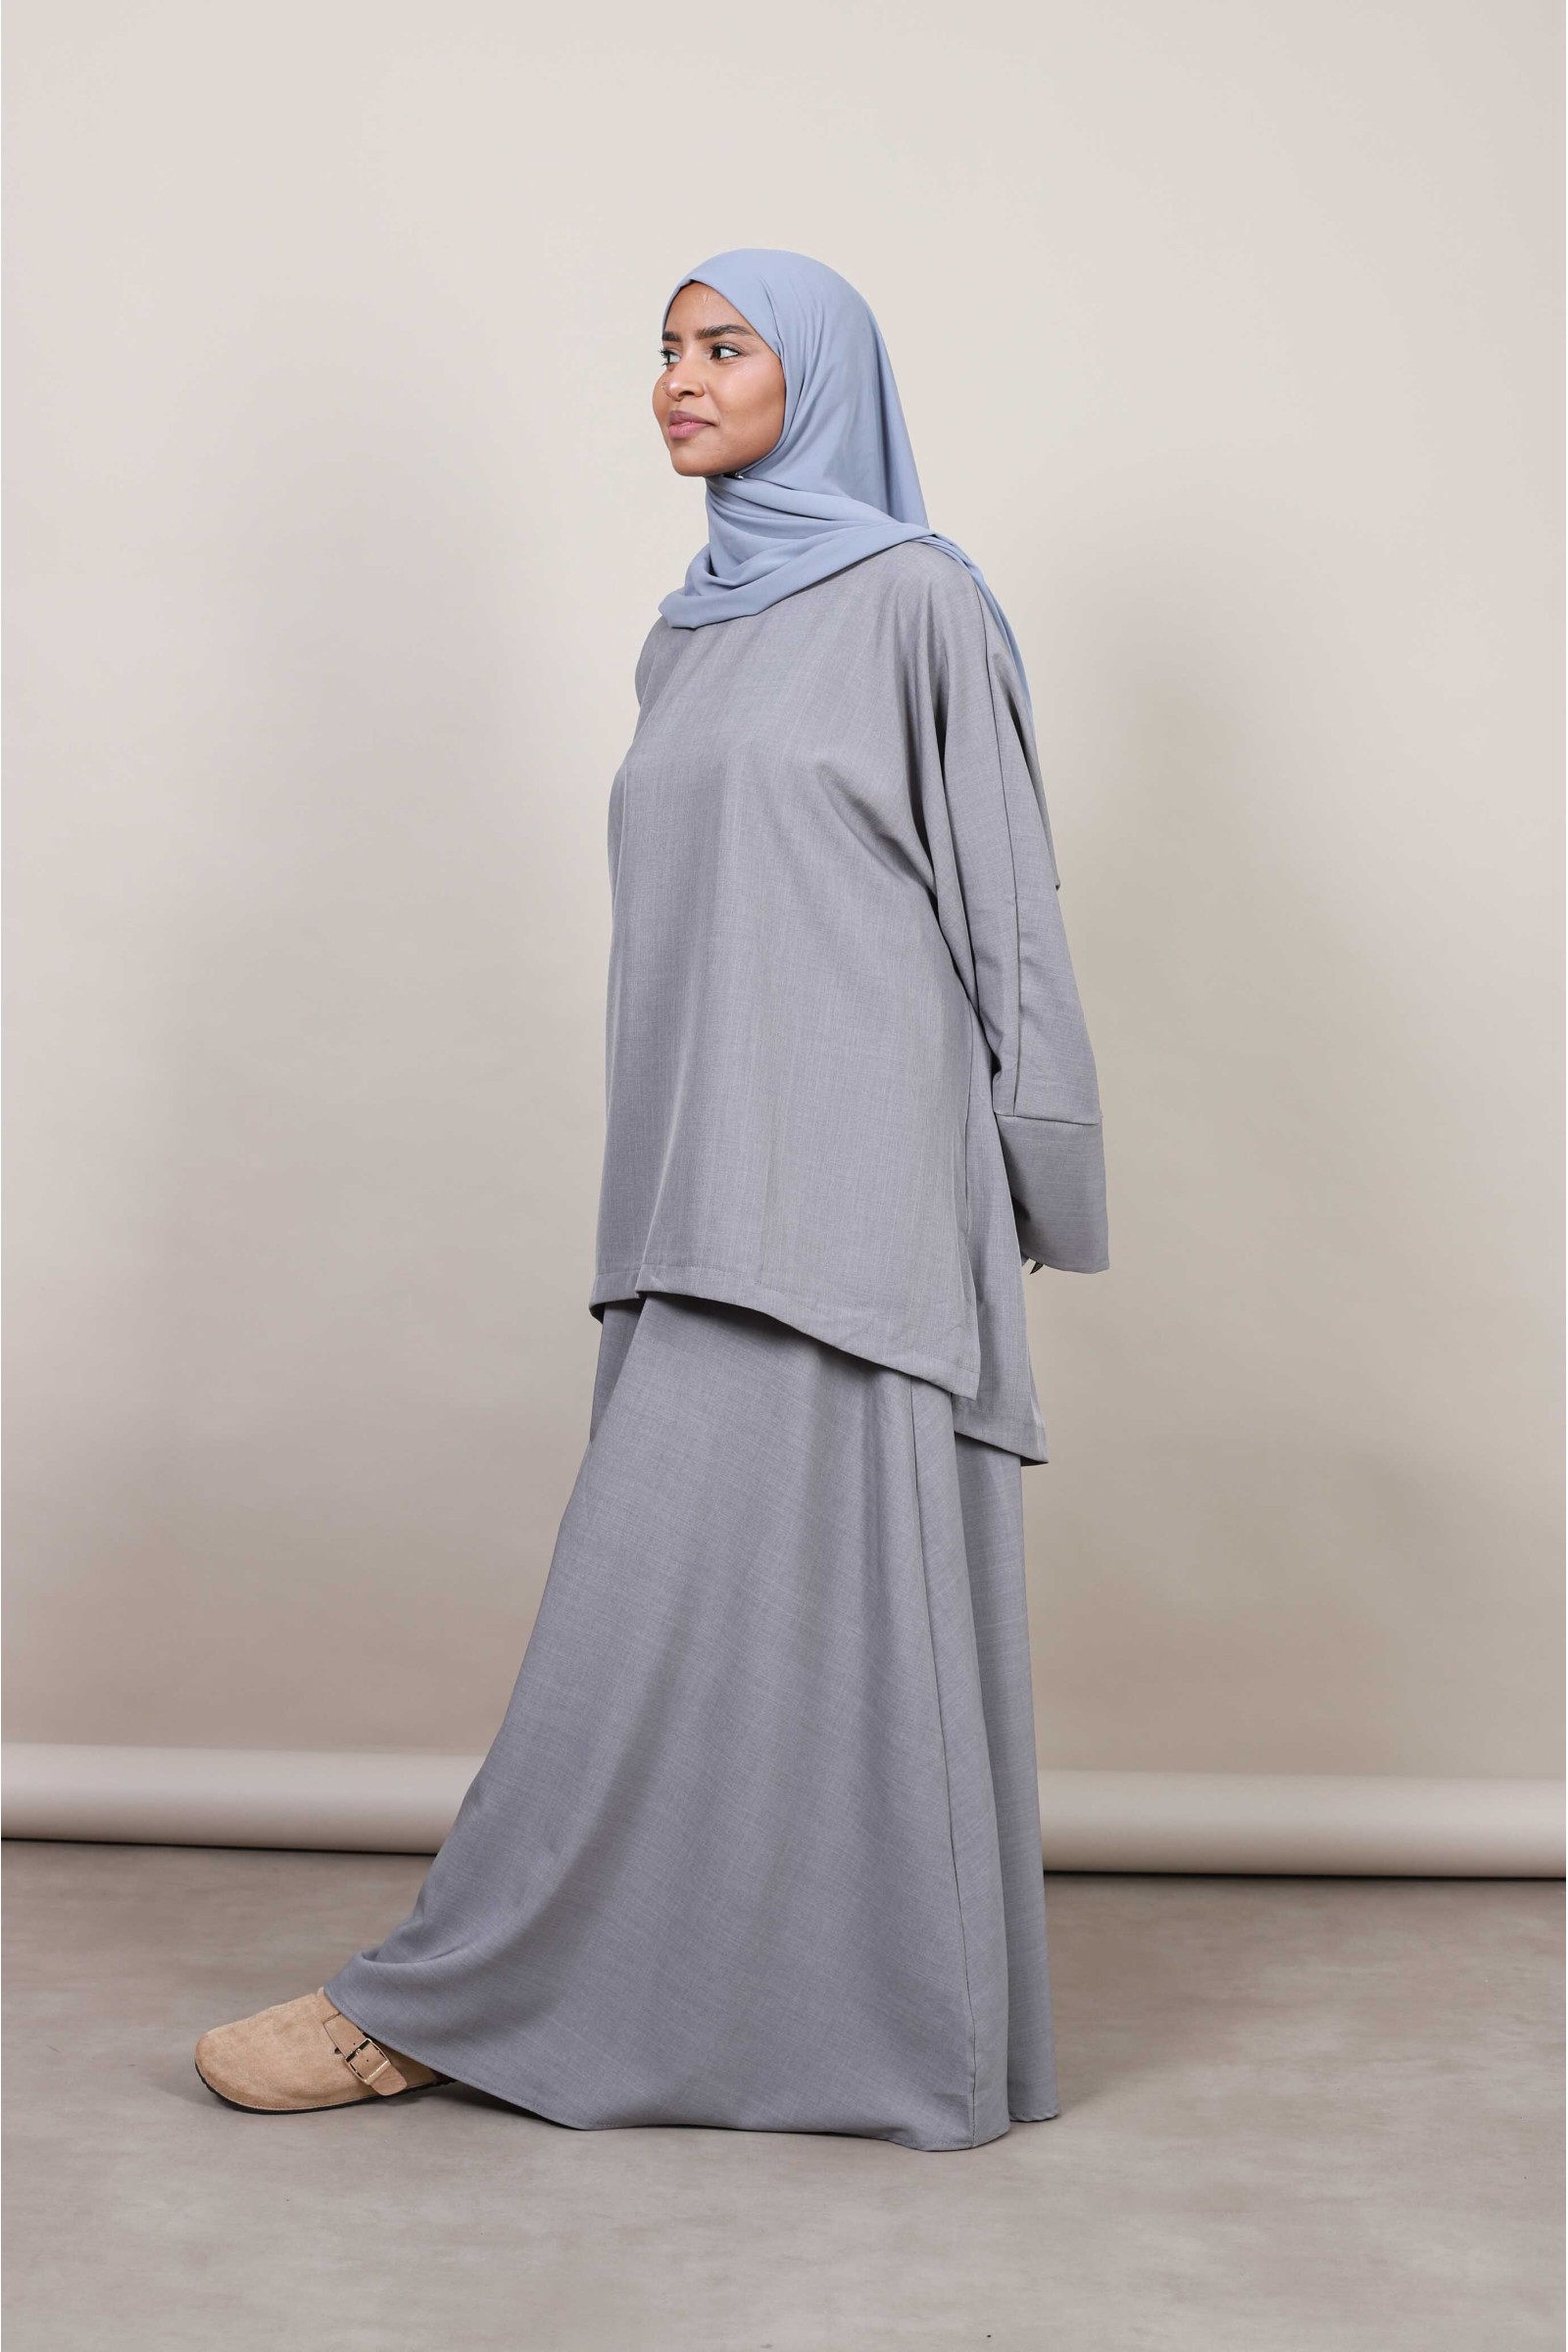 Modest fashion hijab set for Muslim woman